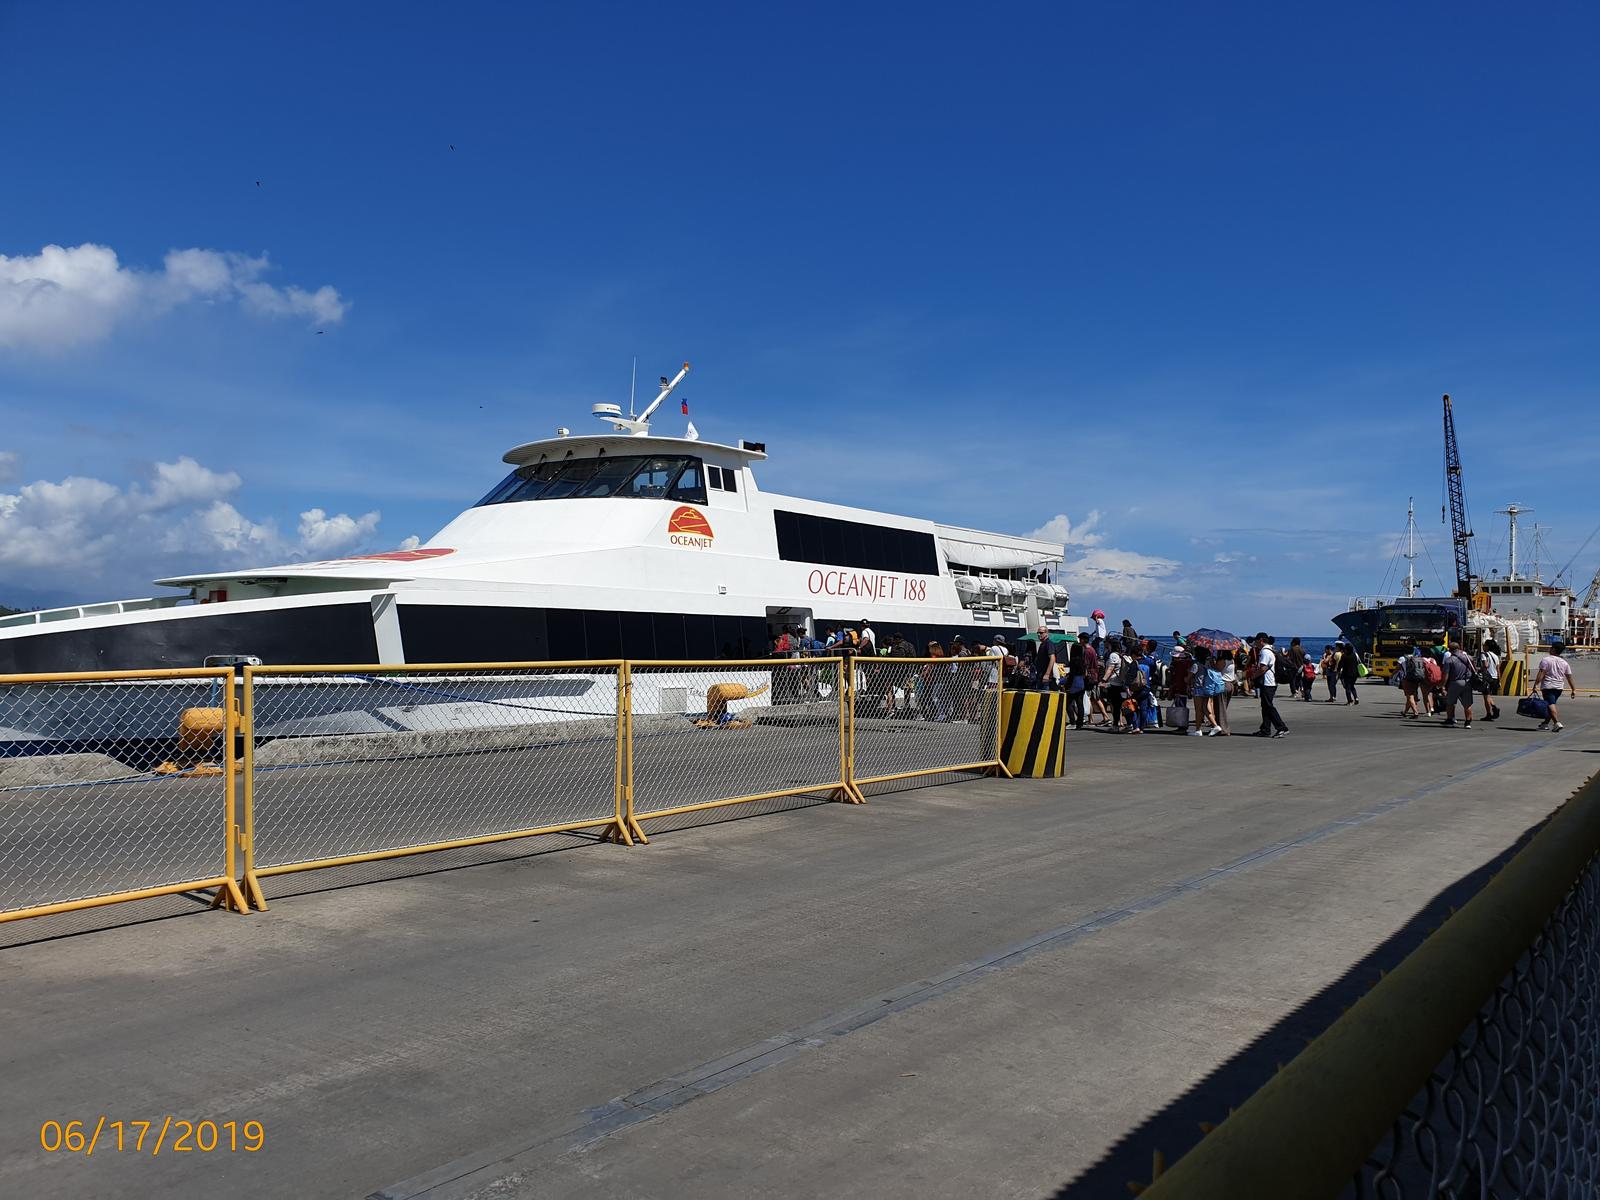 Day 07 - Transfer from Malapascua to Bohol